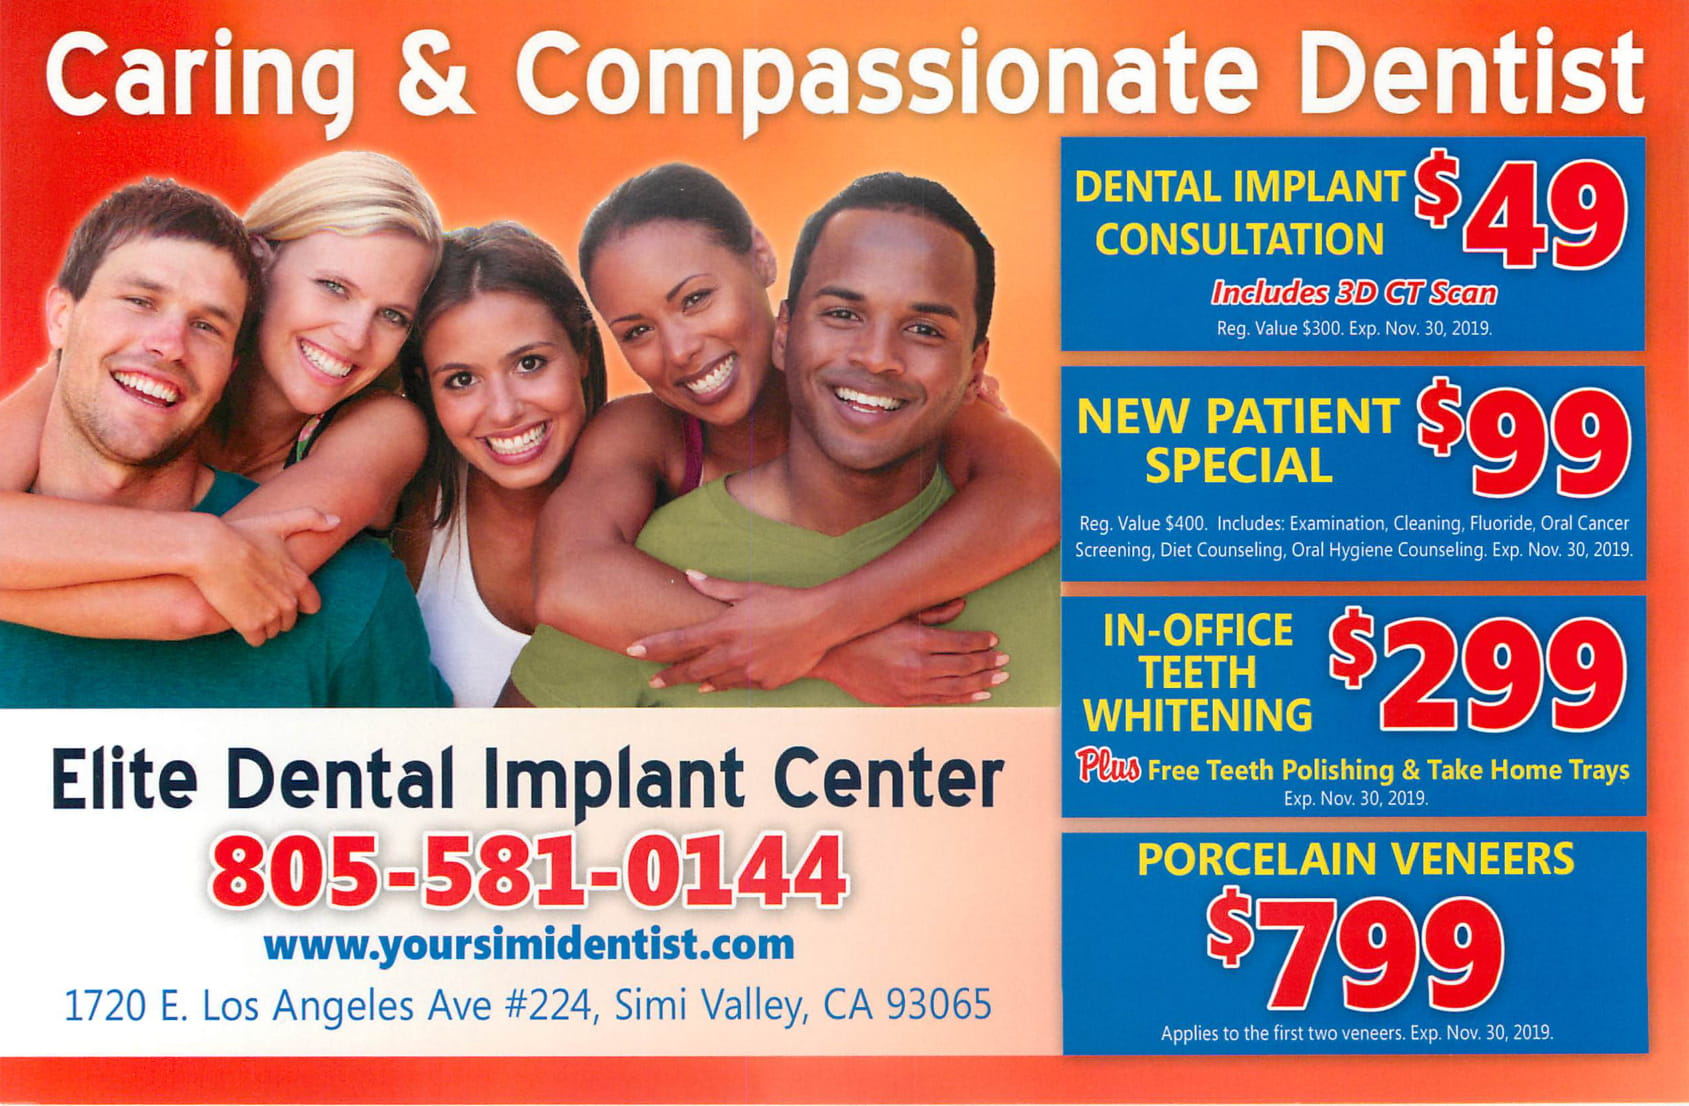 Caring & Compassionate Dentist